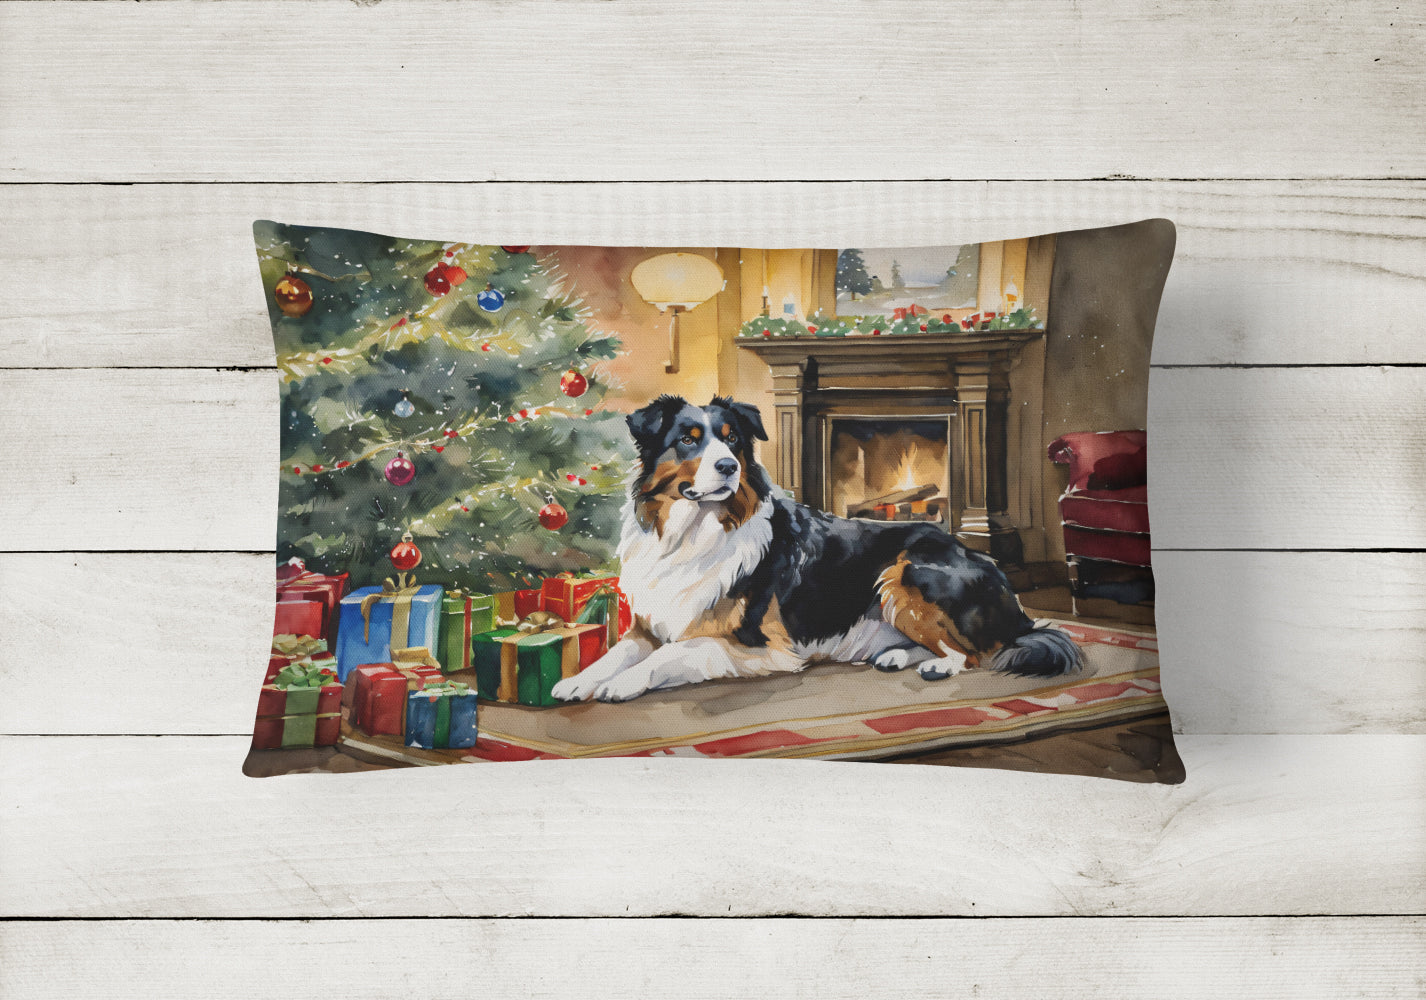 Buy this Australian Shepherd Cozy Christmas Throw Pillow